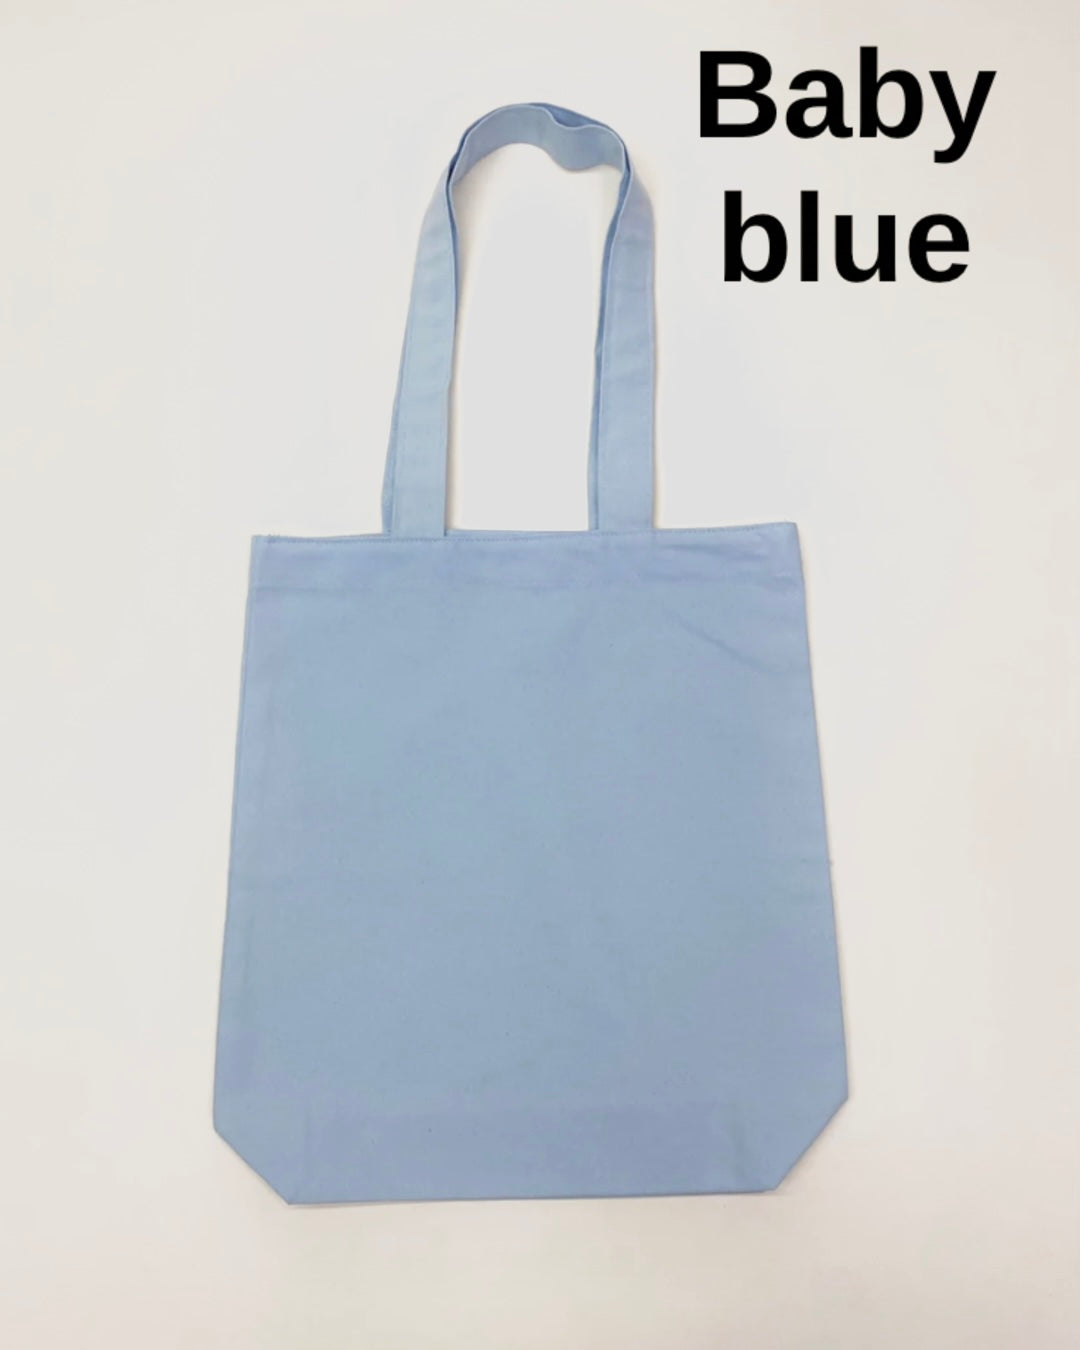 Tote Bag Letra - BABY BLUE, AZUL FUERTE, GRIS